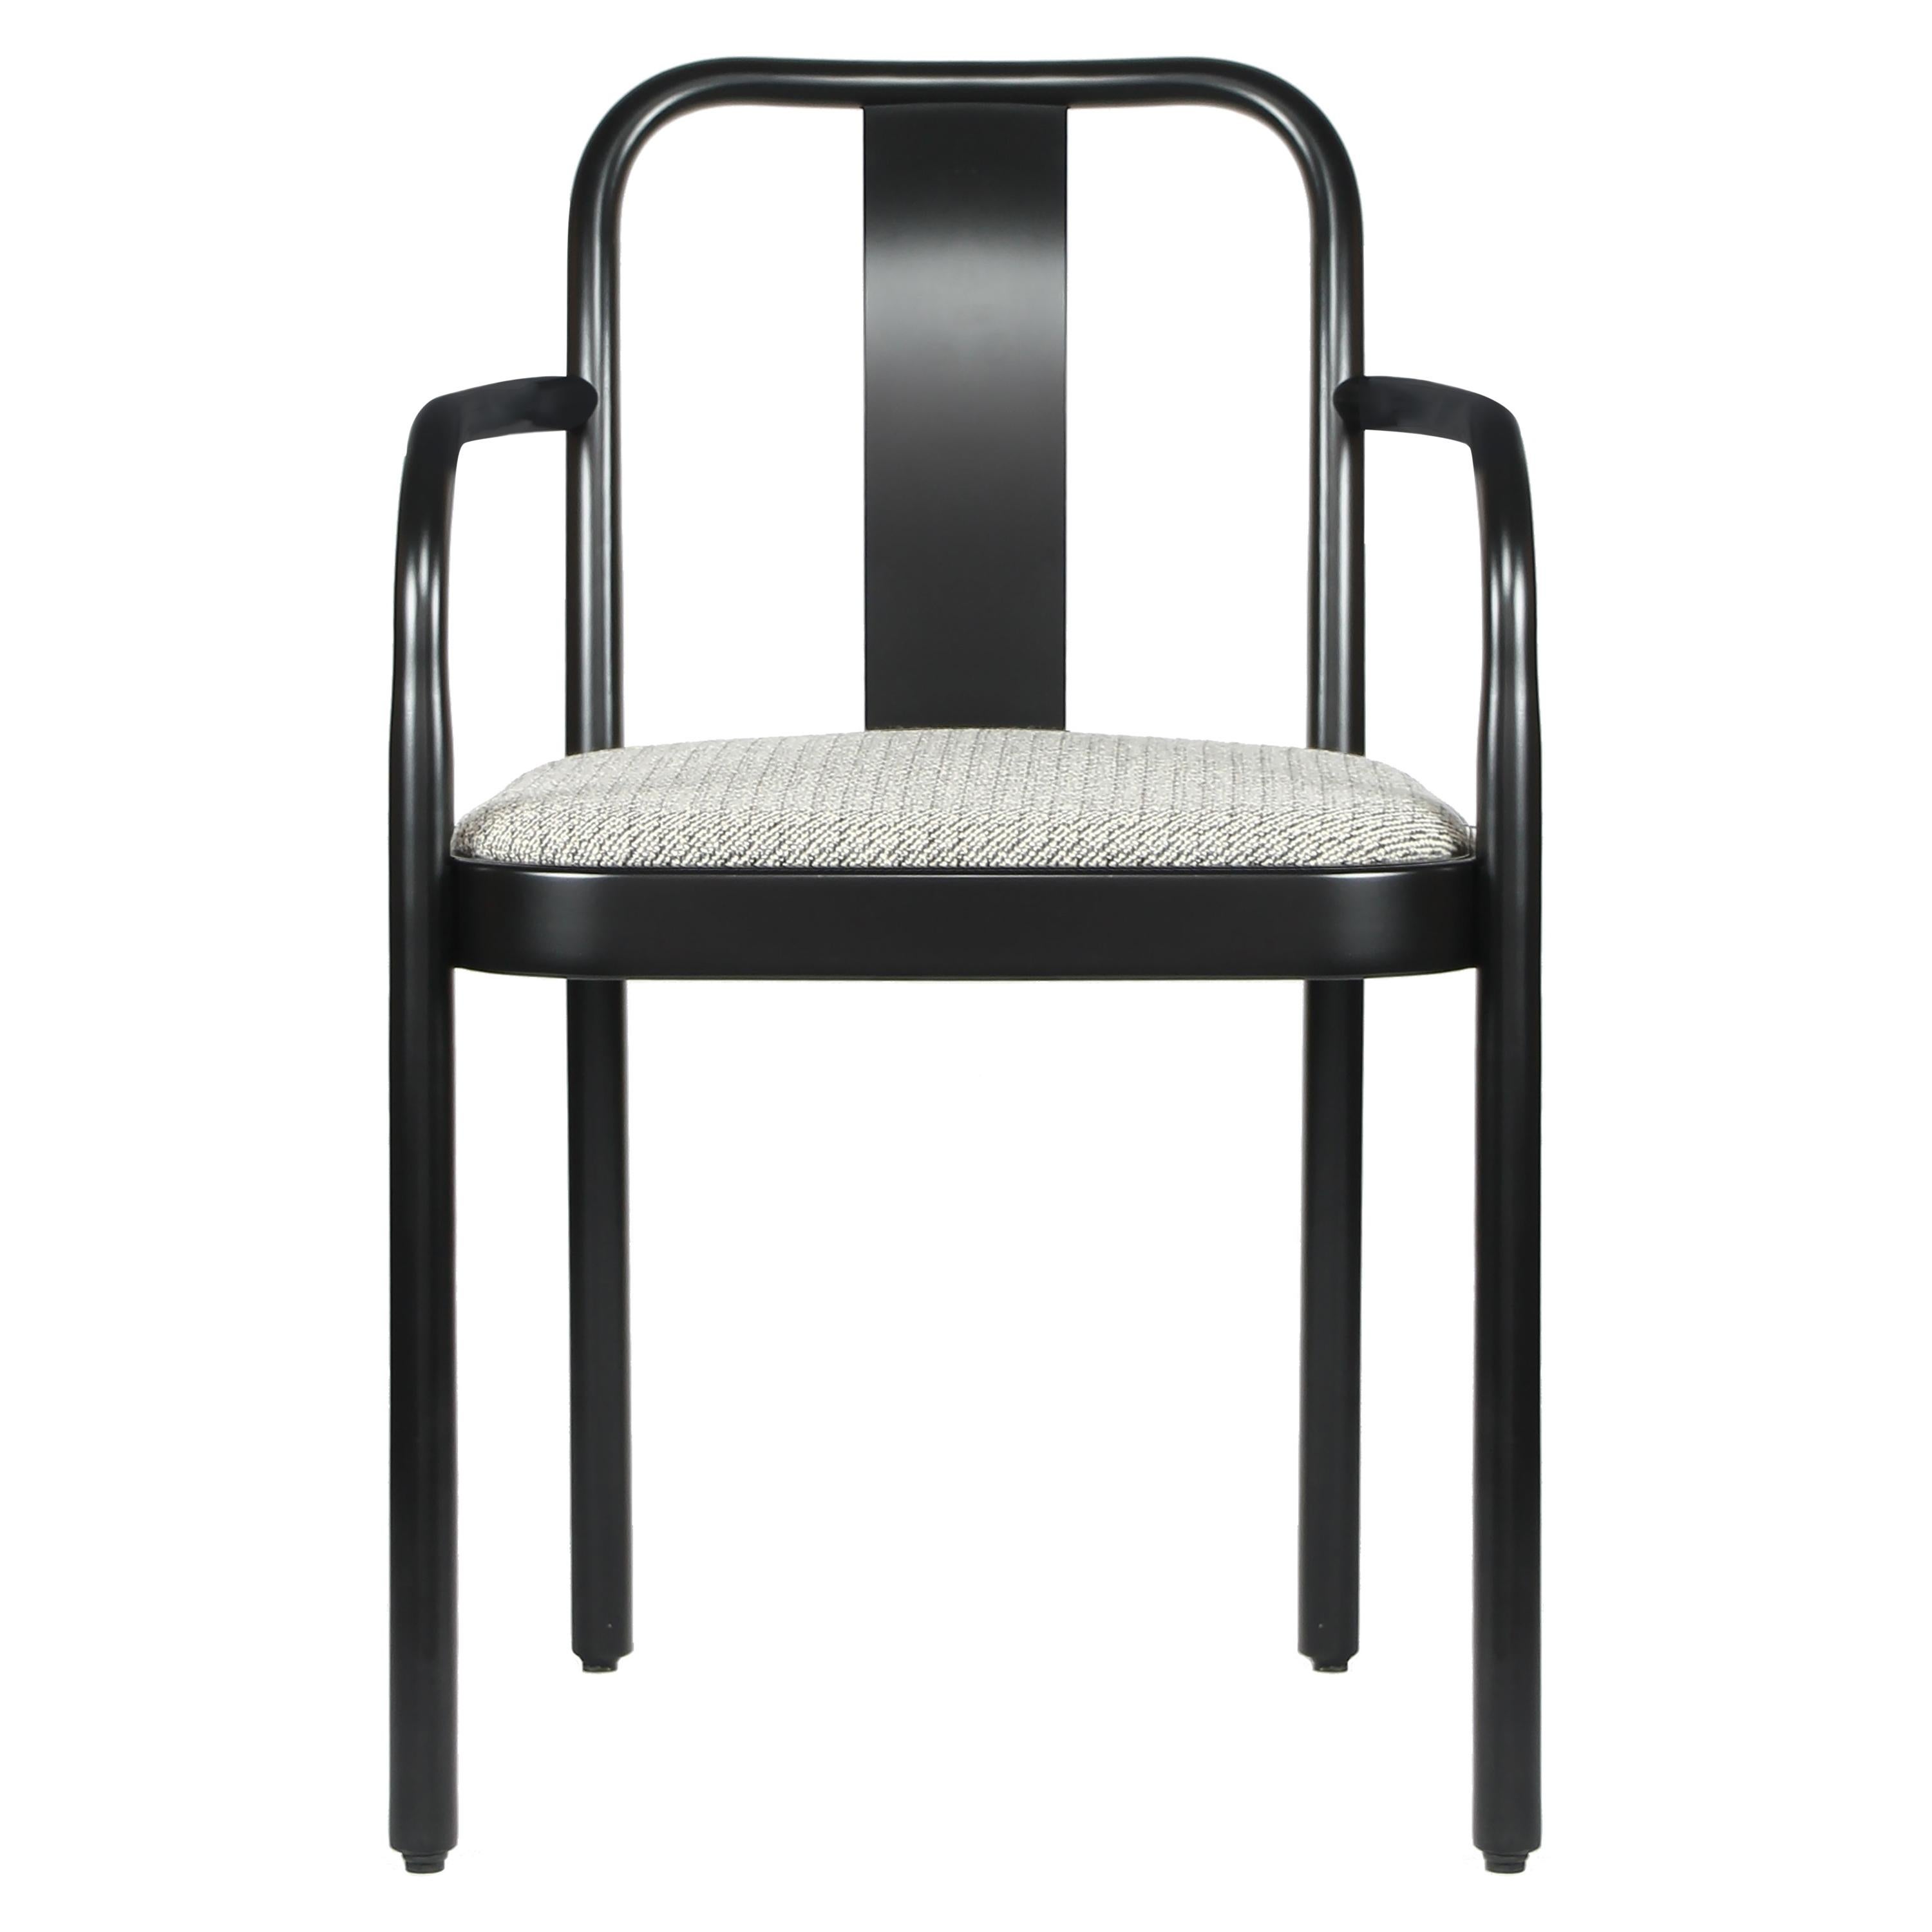 Gebrüder Thonet Vienna GmbH Sugiloo Chair with Armrest & Upholsterd Seat